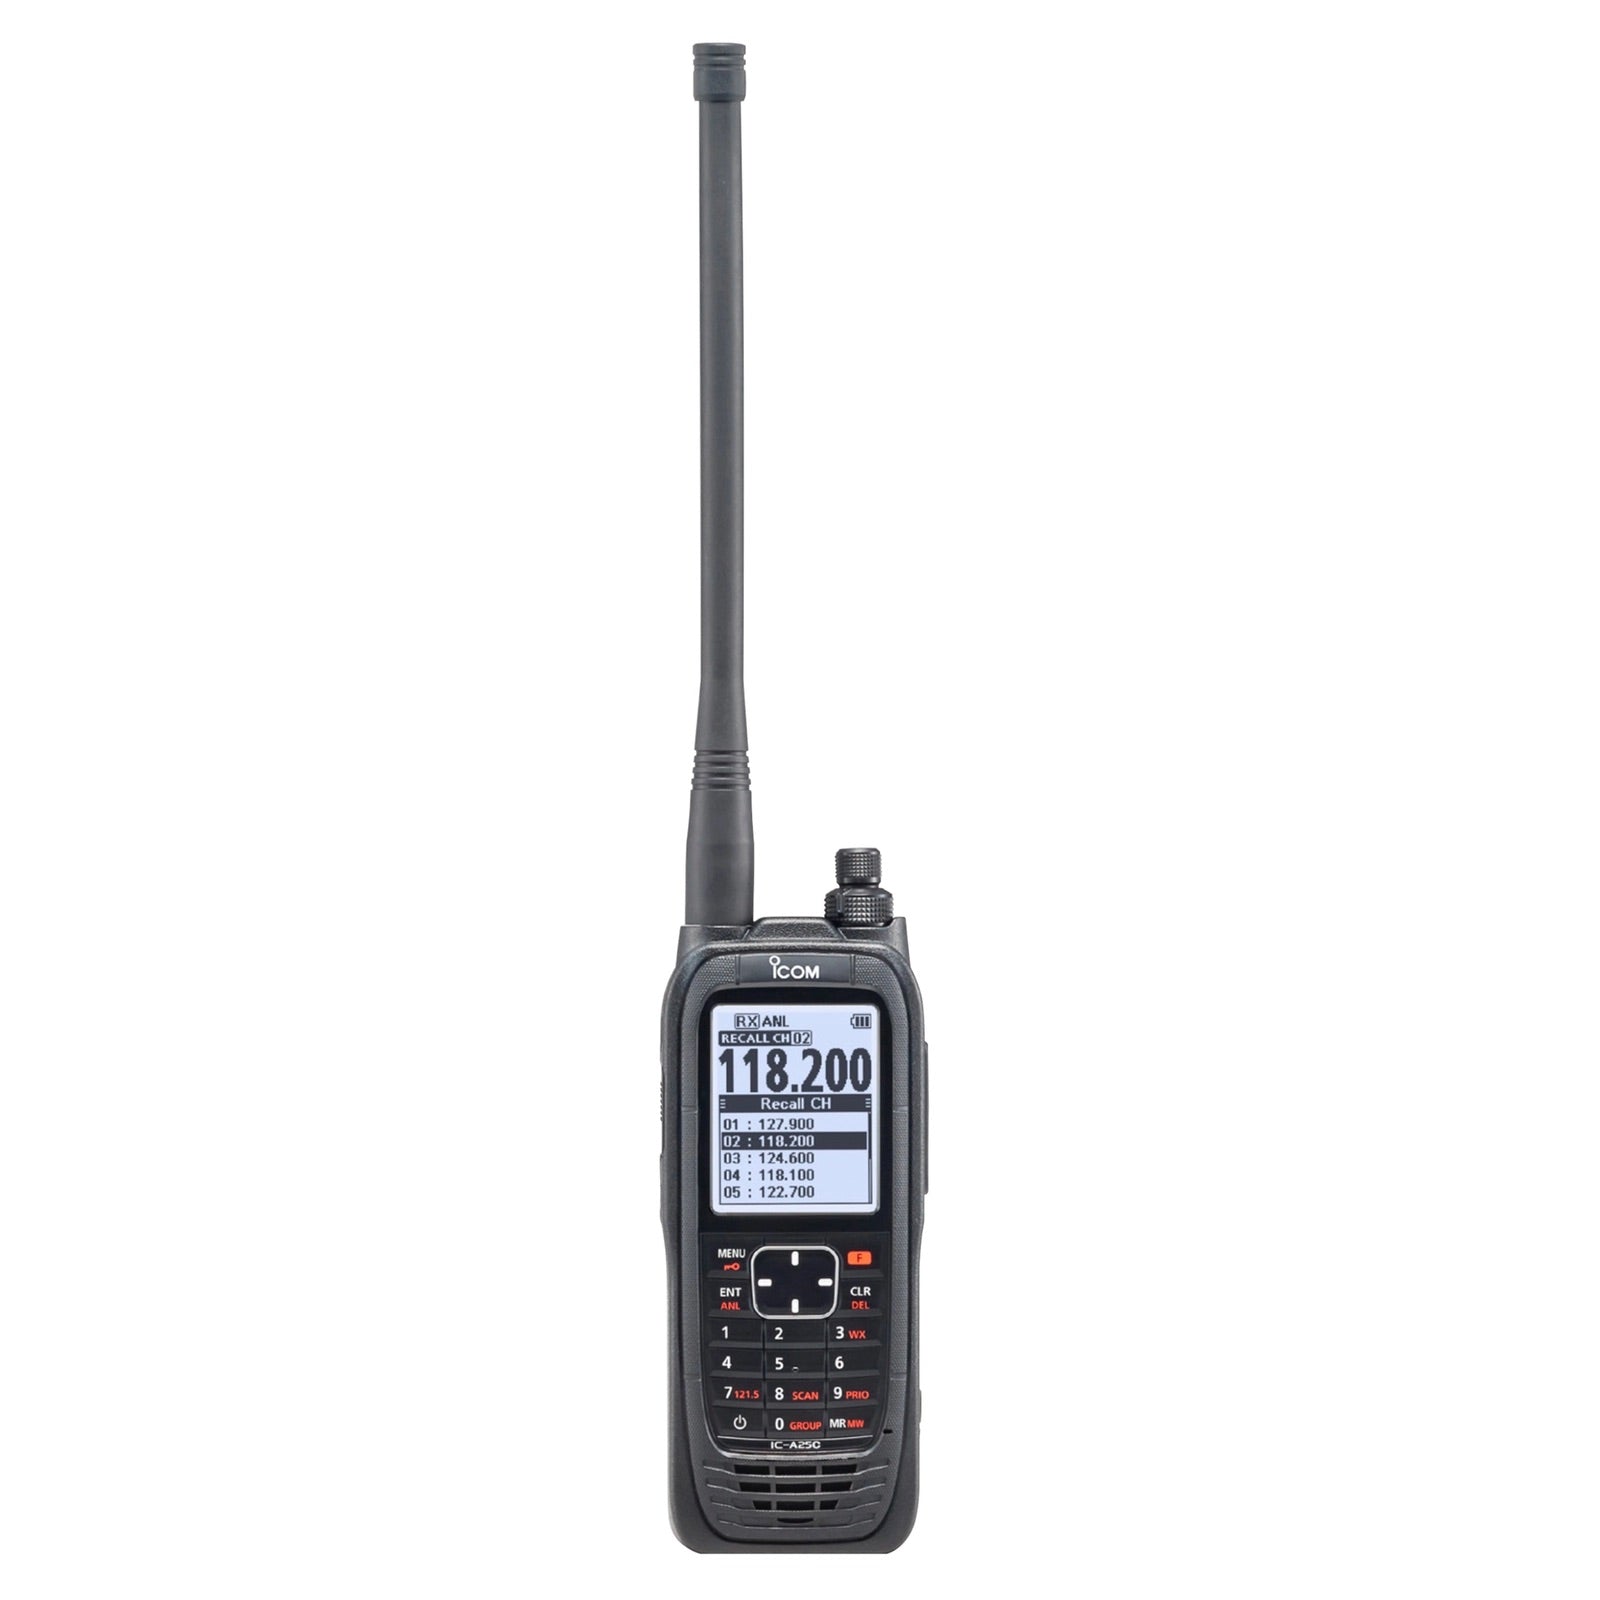 ICOM IC-A25CE Airband VHF Handheld Transceiver